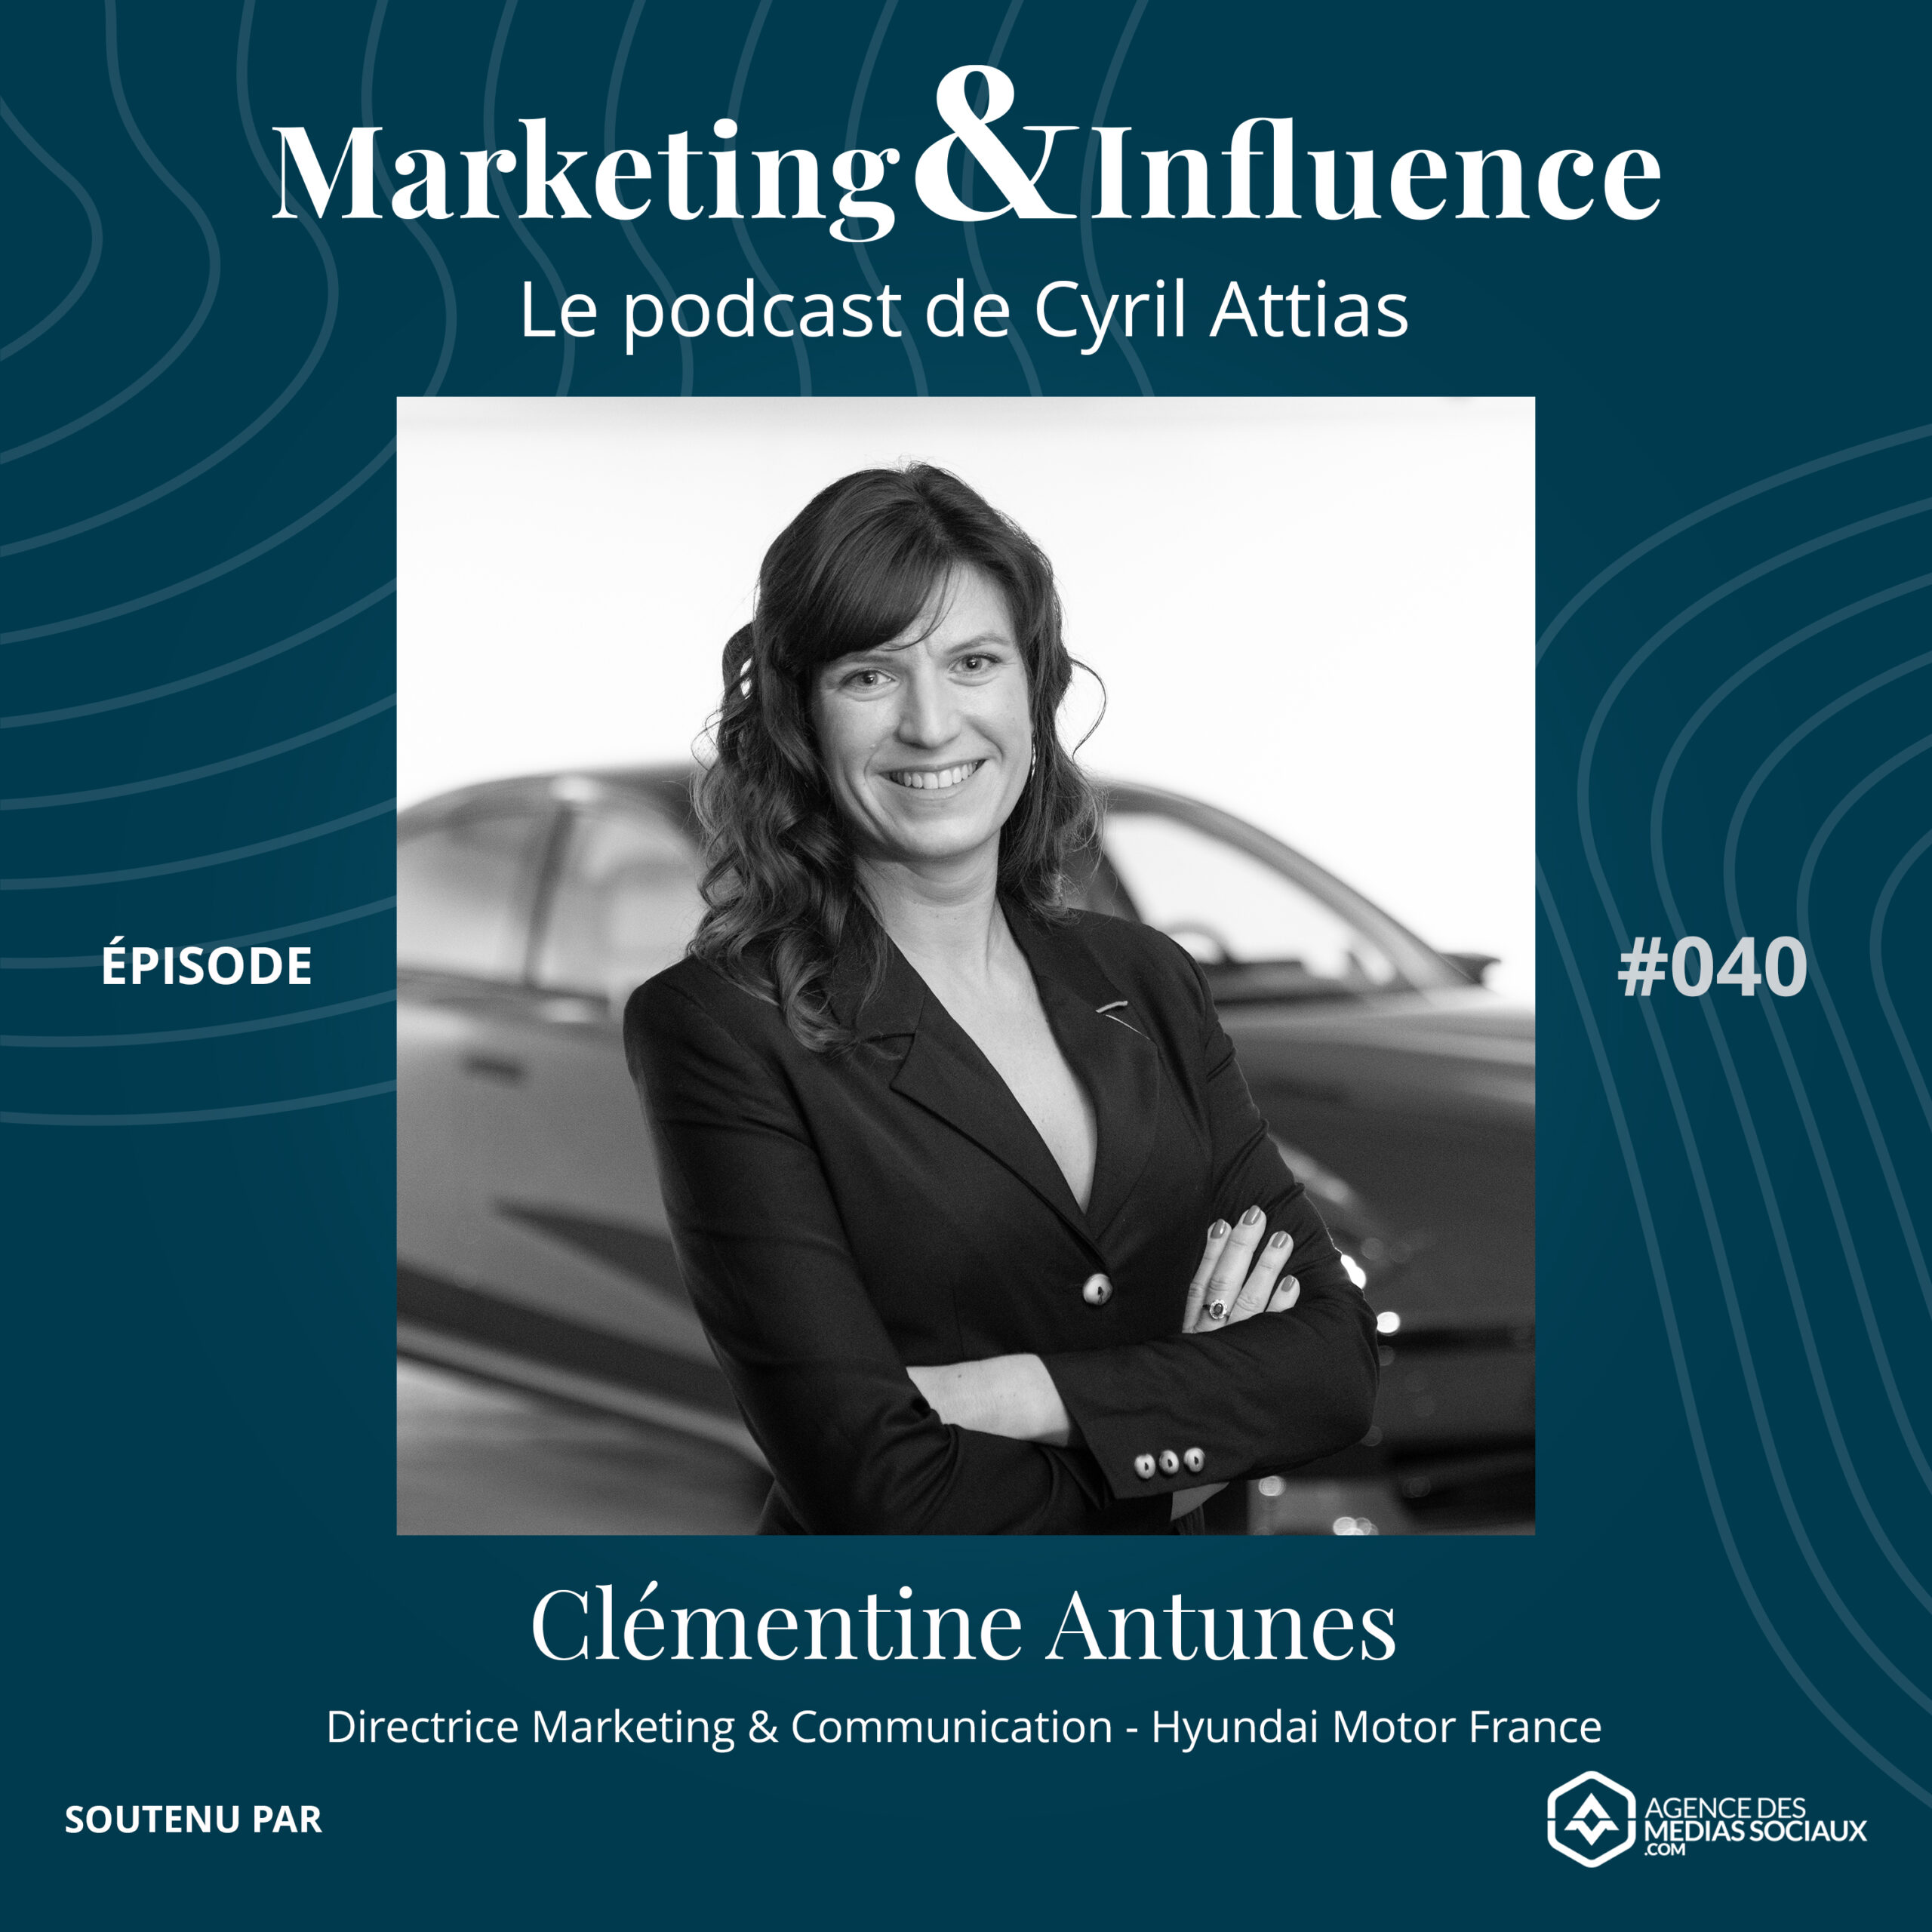 Episode-Clementine-Antunes-Directrice-Marketing-Communication-Hyundai-Motor-France-Podcast-Cyril-Attias-Marketing-Influence